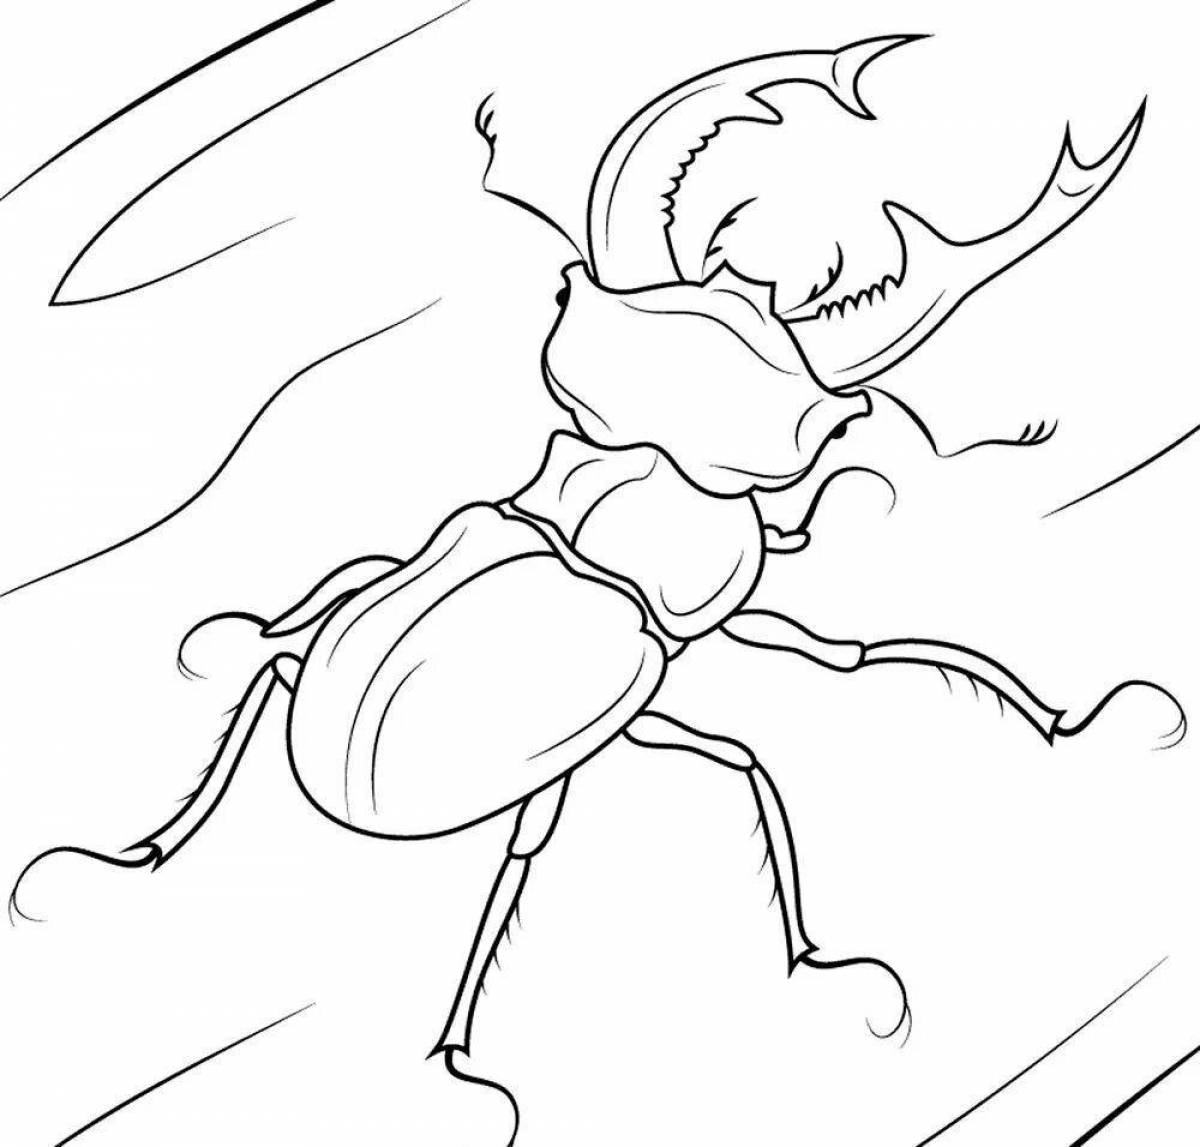 Stag beetle #12